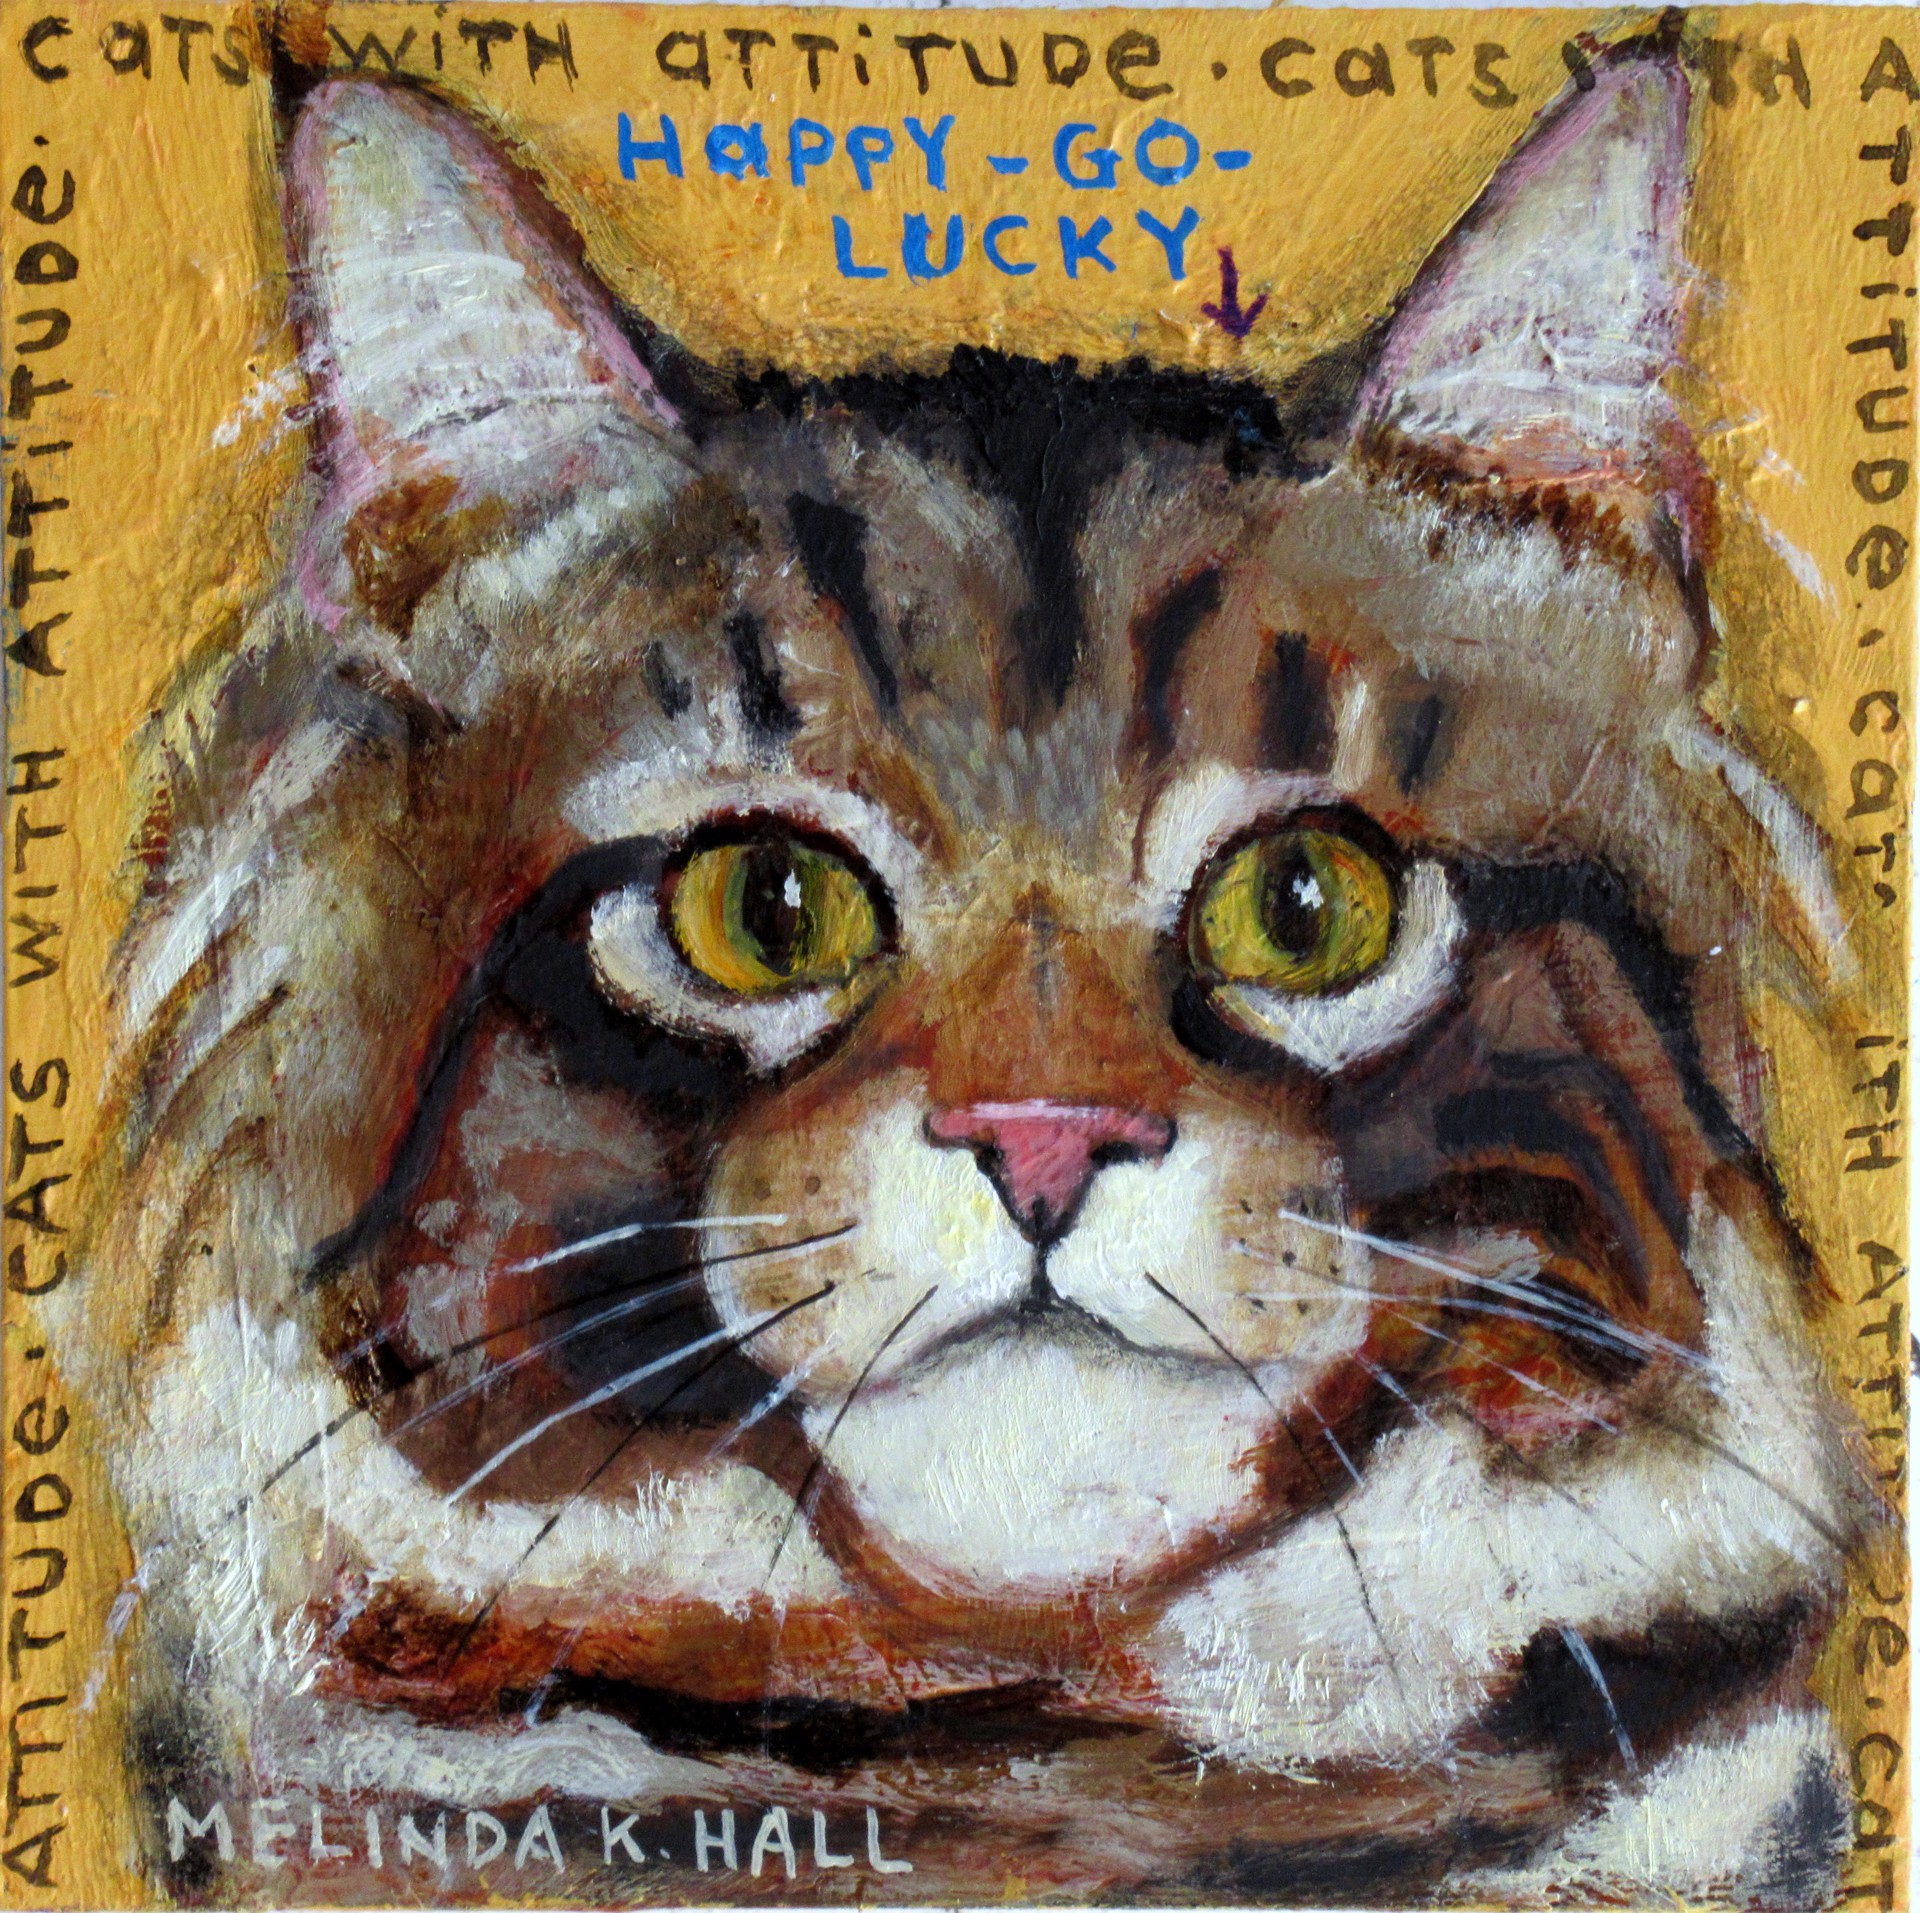 Cats With Attitude:  Happy-Go-Lucky by Melinda K. Hall